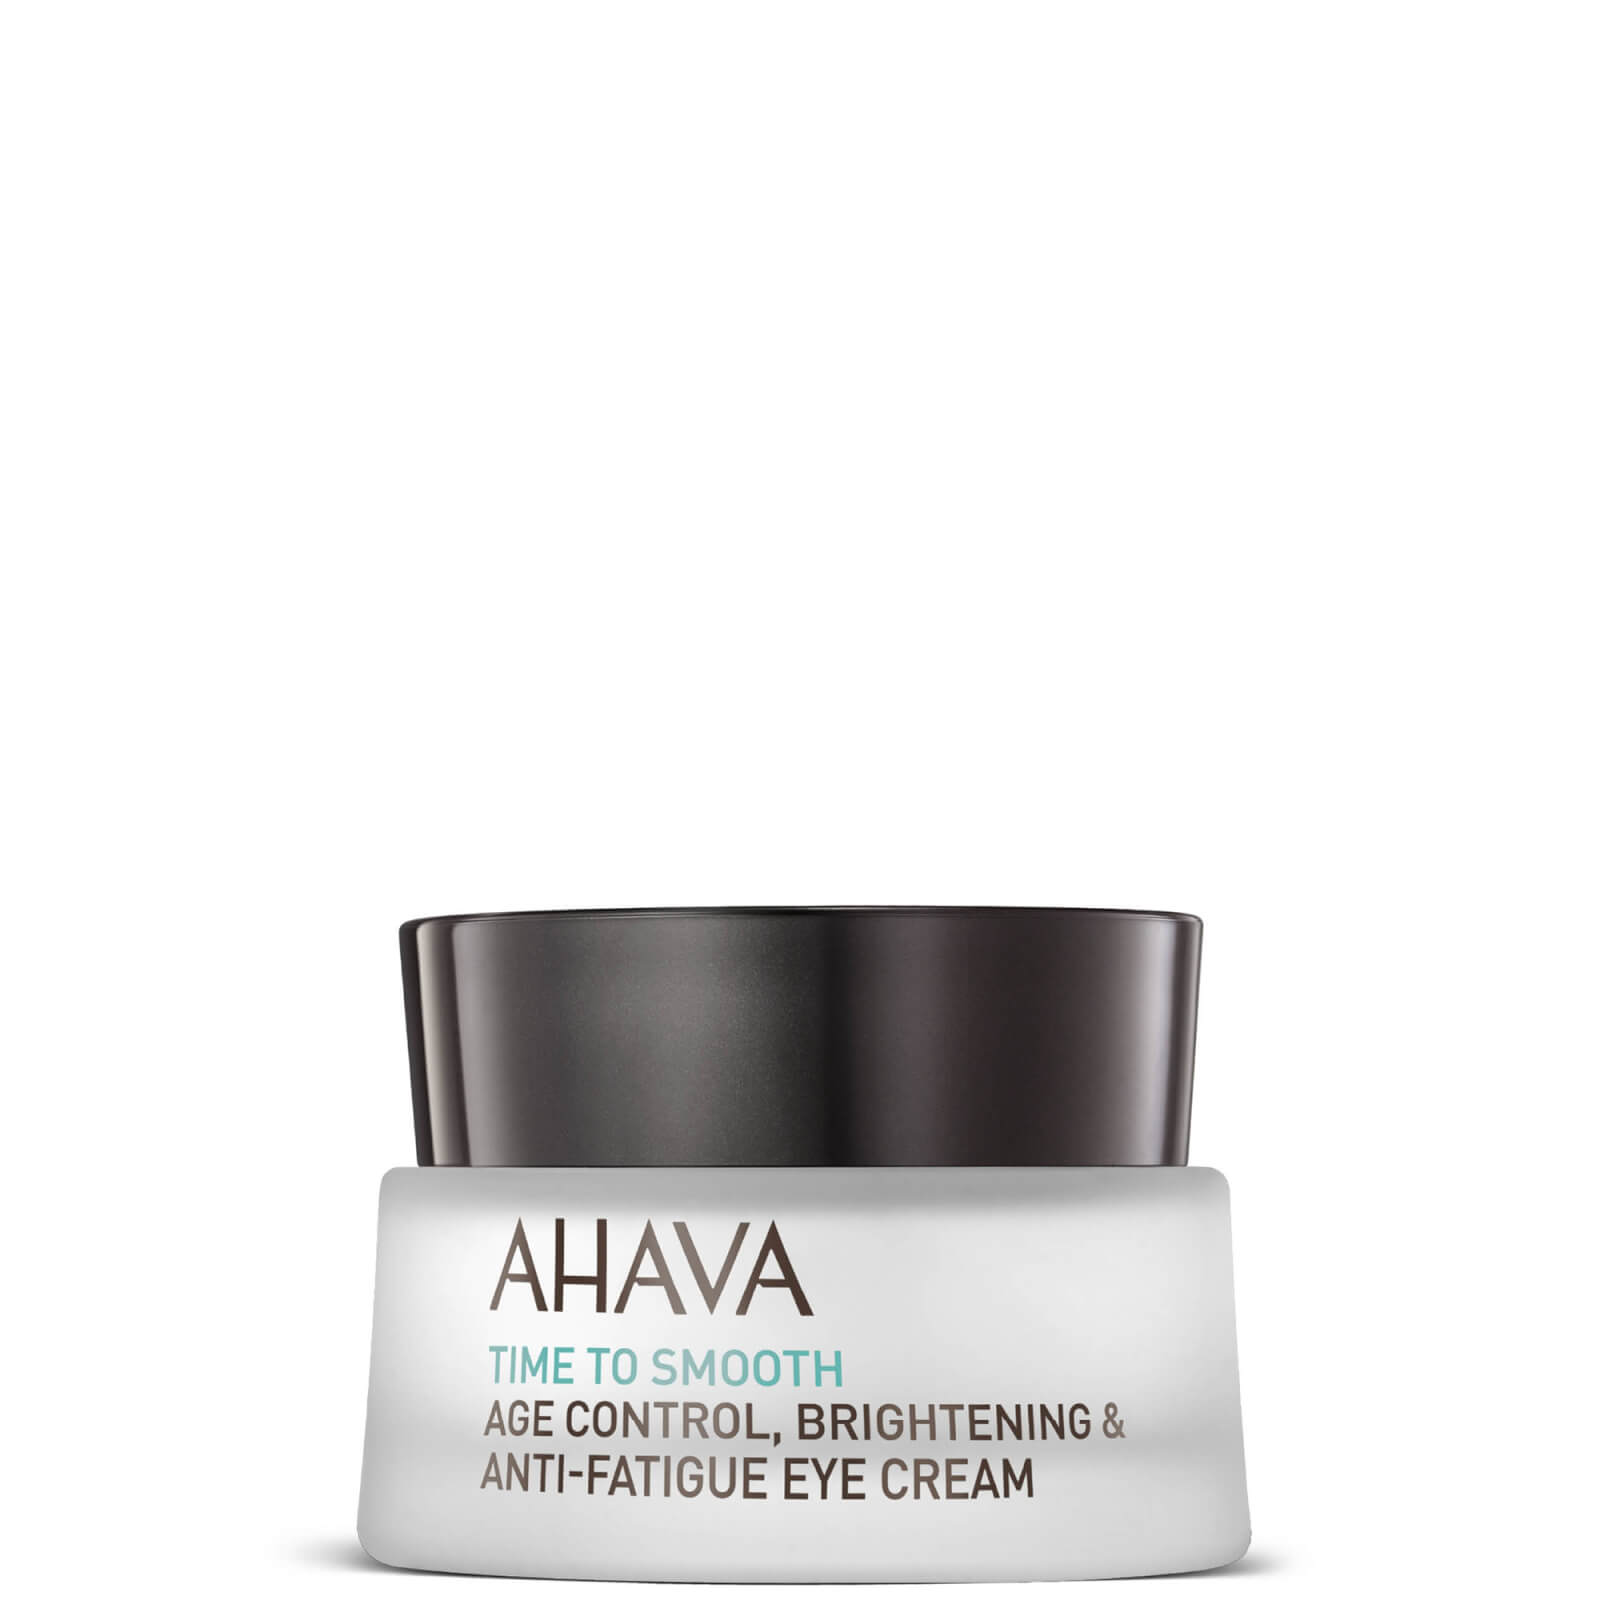 Image of AHAVA Age Control crema occhi illuminante 15 ml